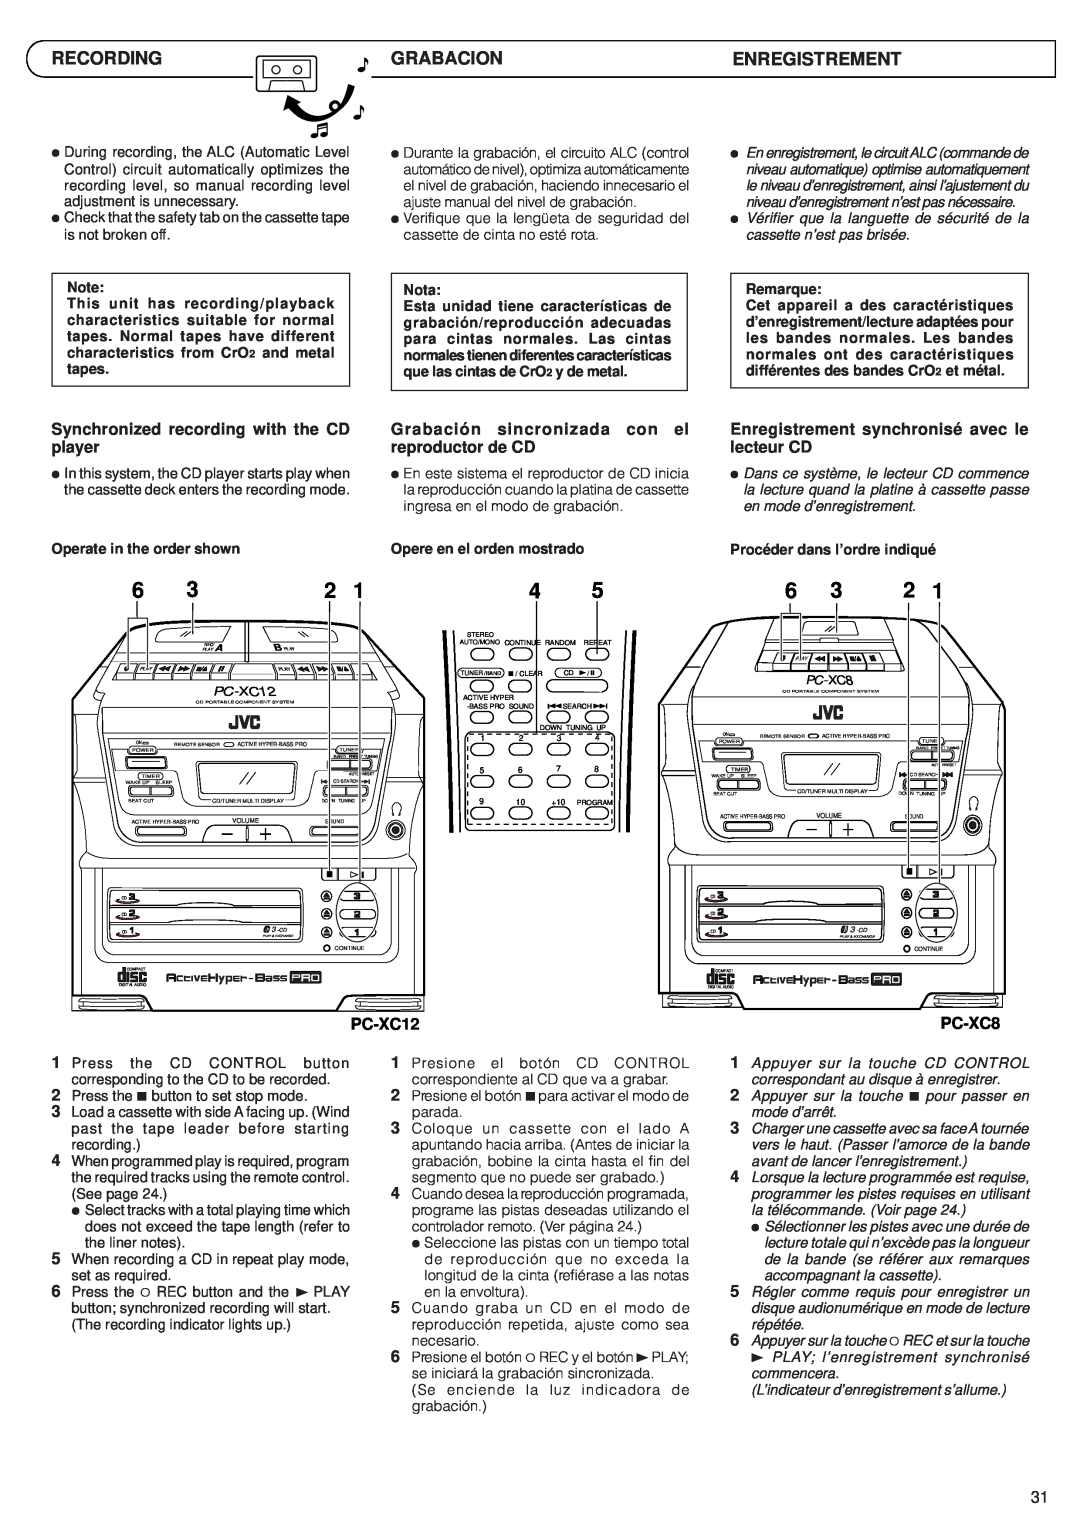 JVC PC-XC12 manual Recording, Grabacion, Enregistrement, Synchronized recording with the CD player, PC-XC8 